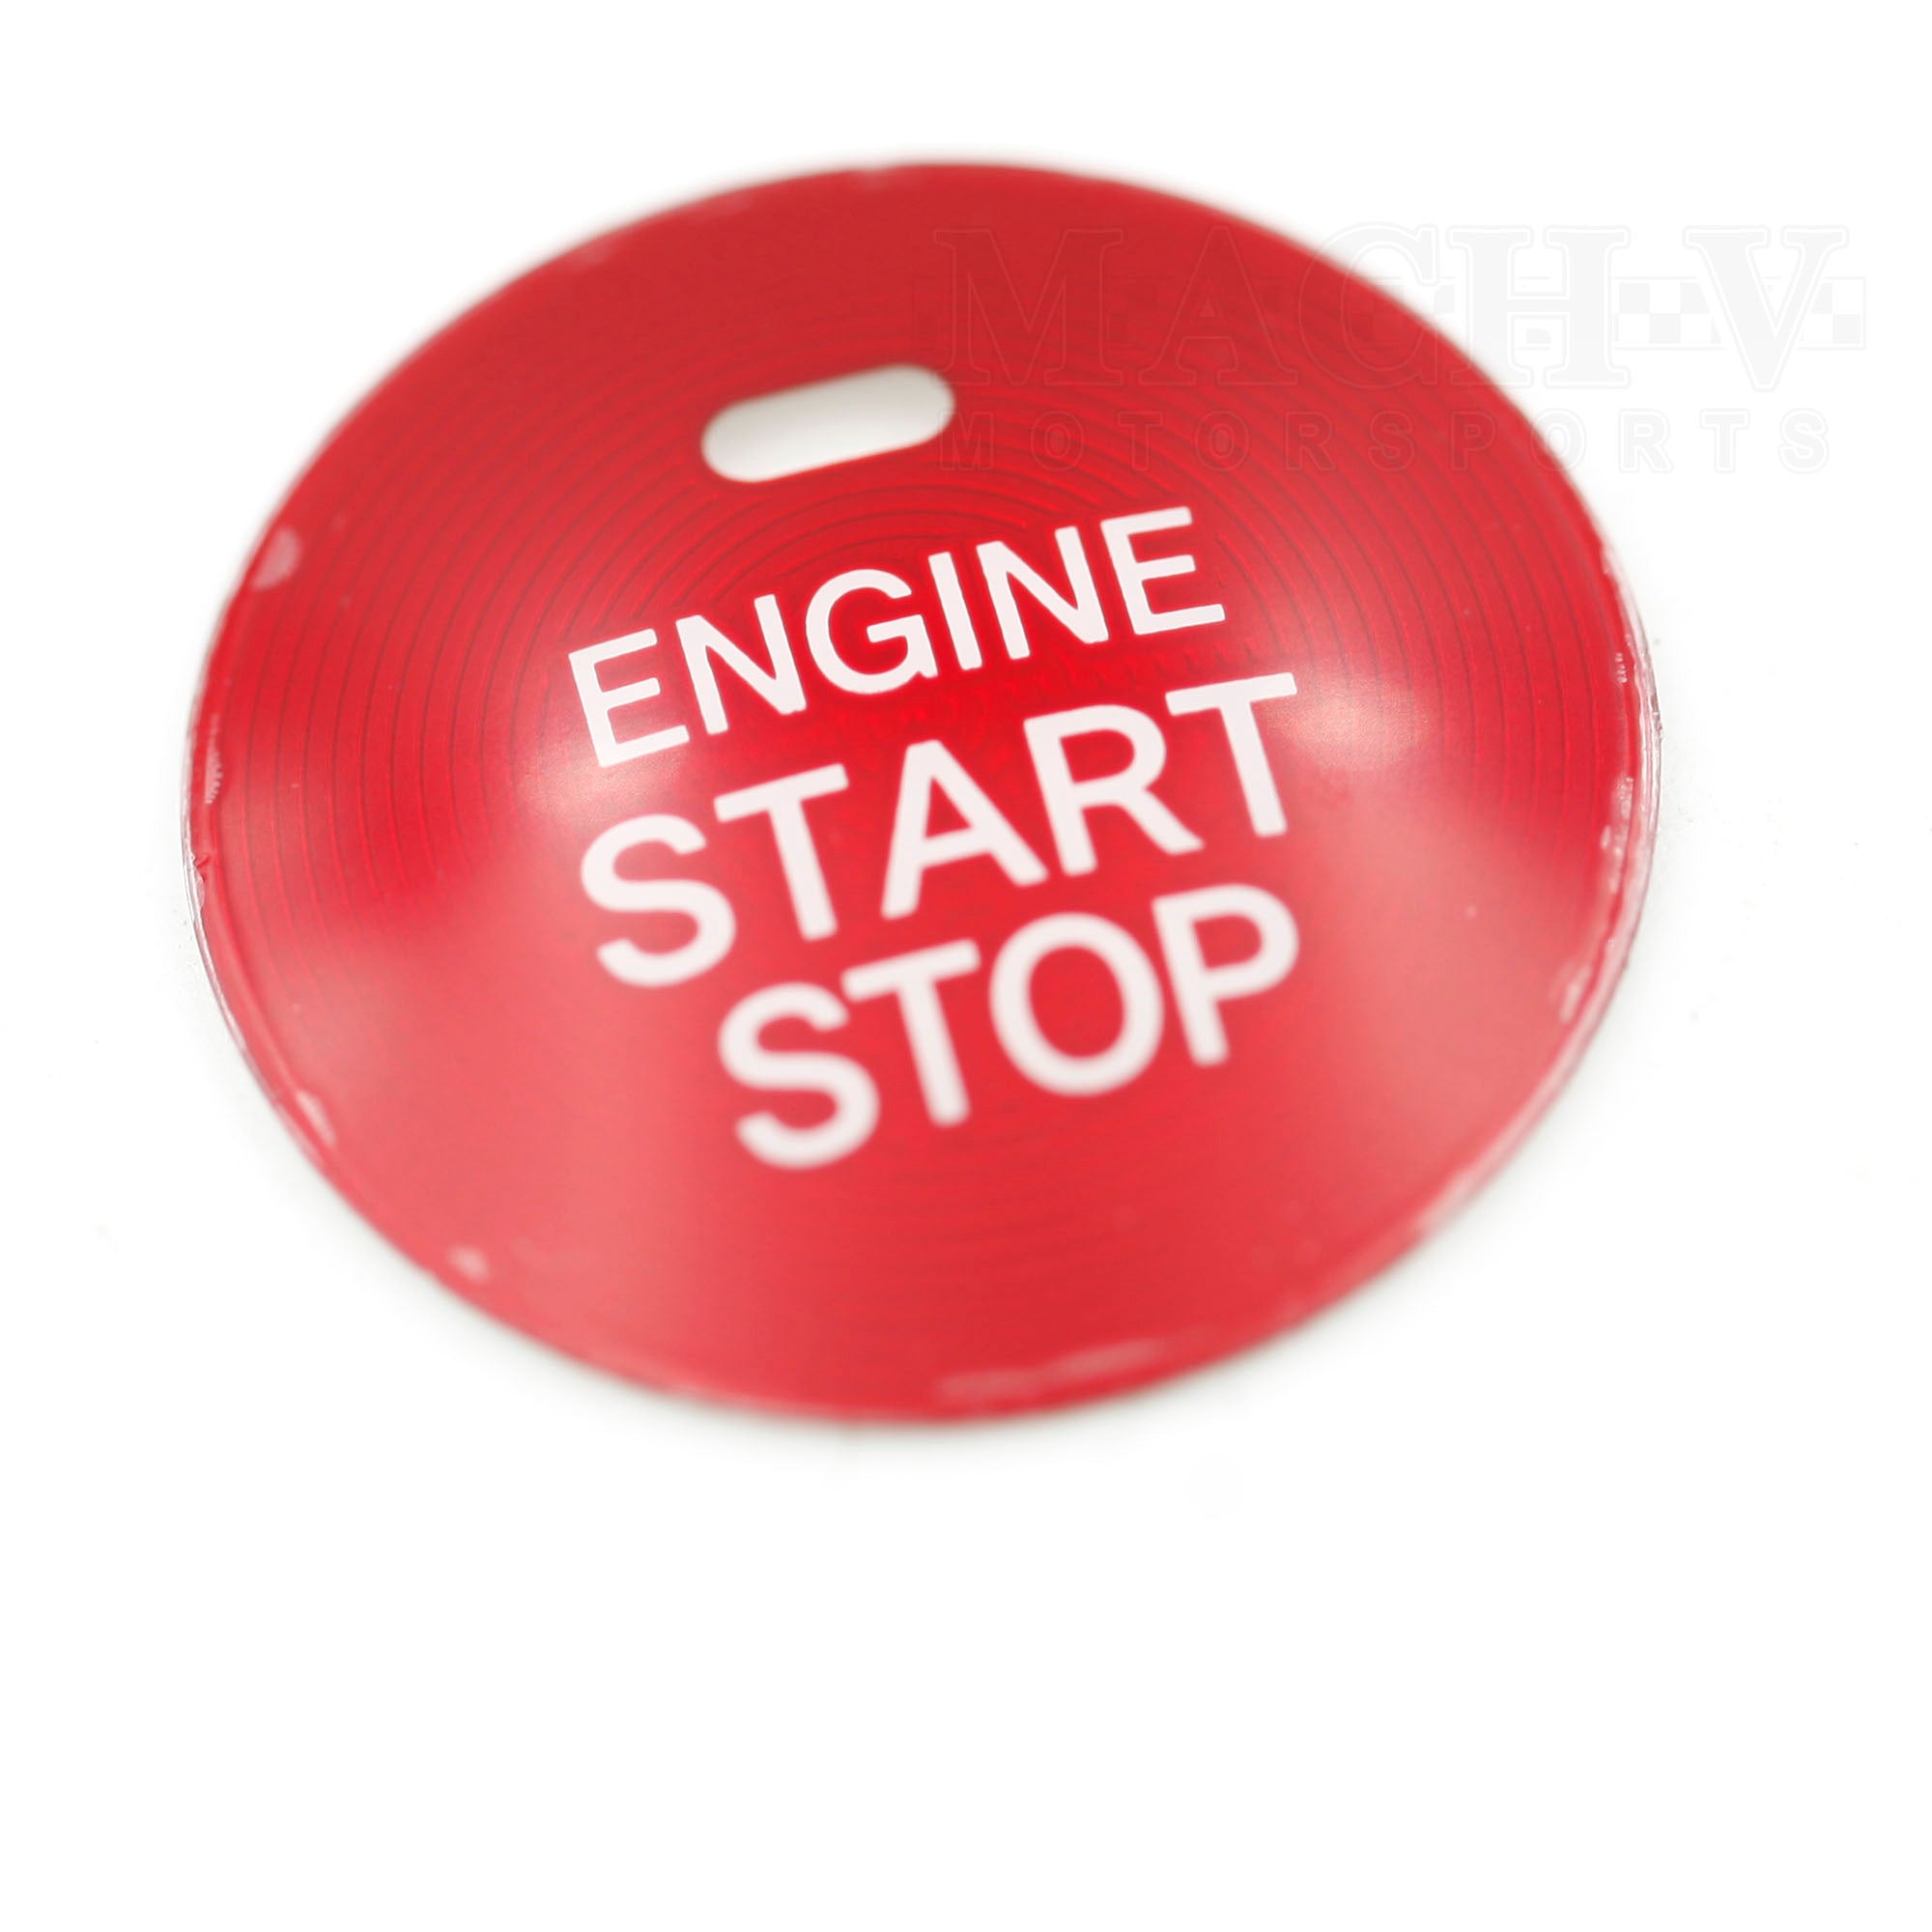 Subaru JDM Engine Start Button Cover 